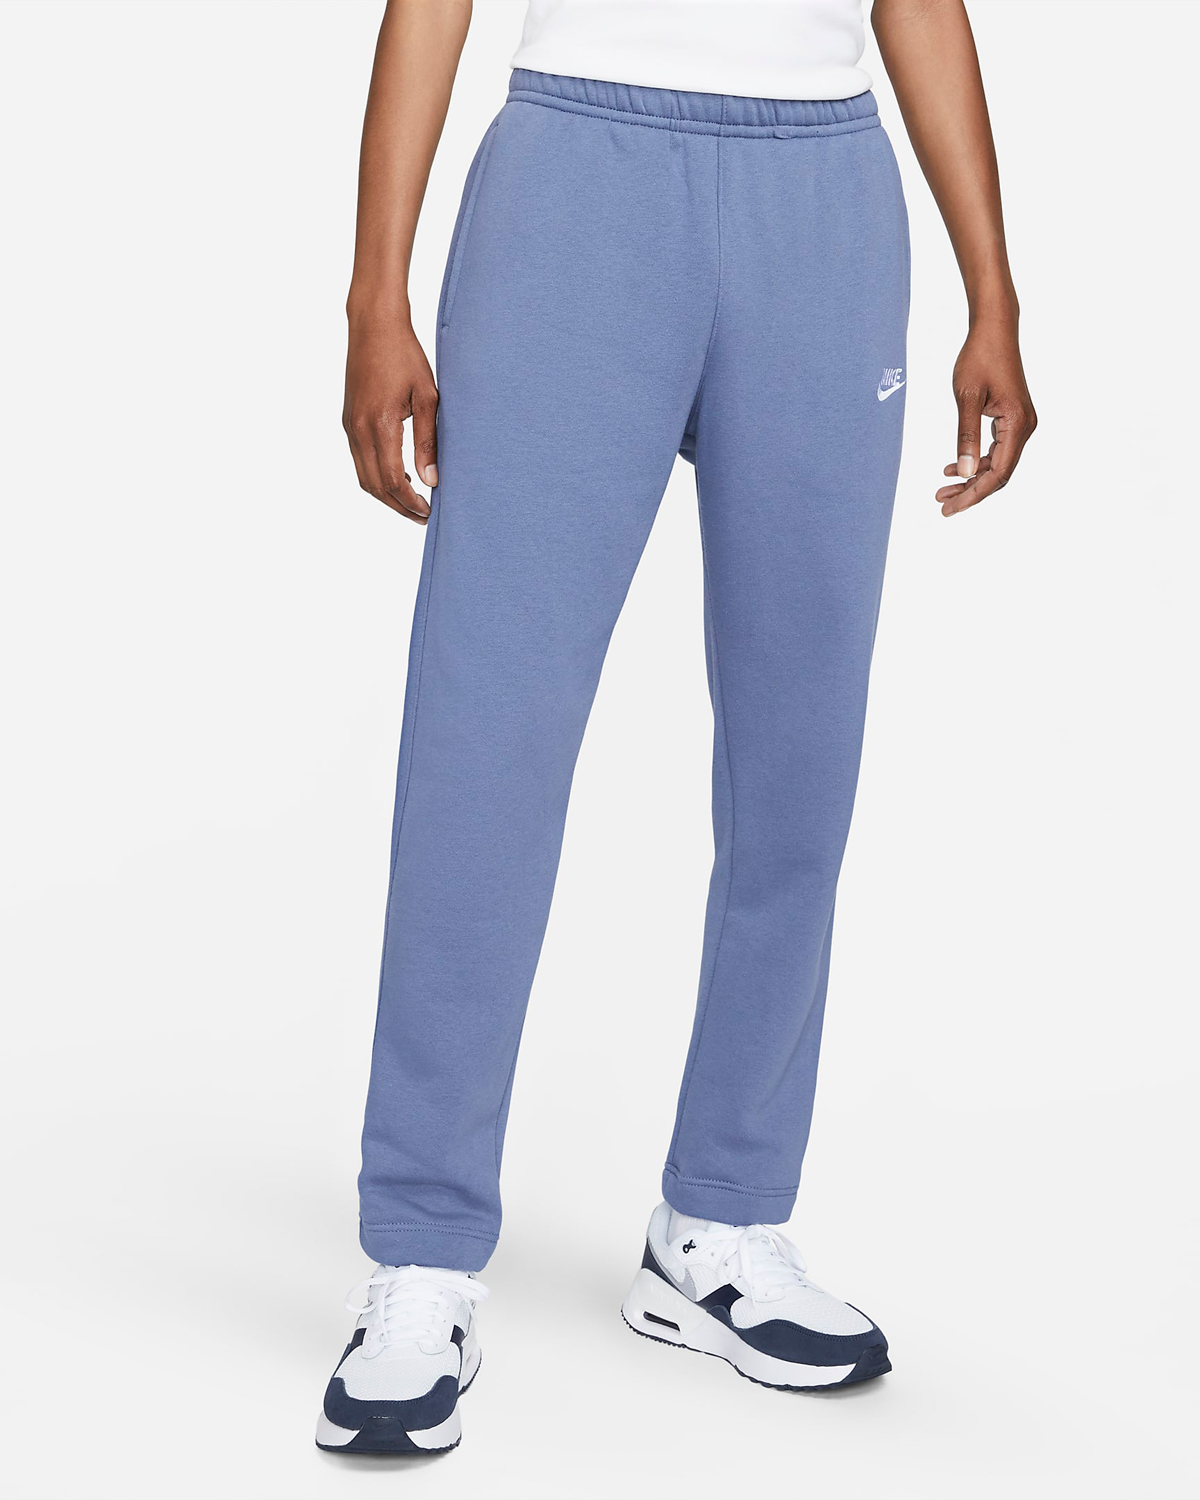 Nike-Club-Fleece-Pant-Diffused-Blue